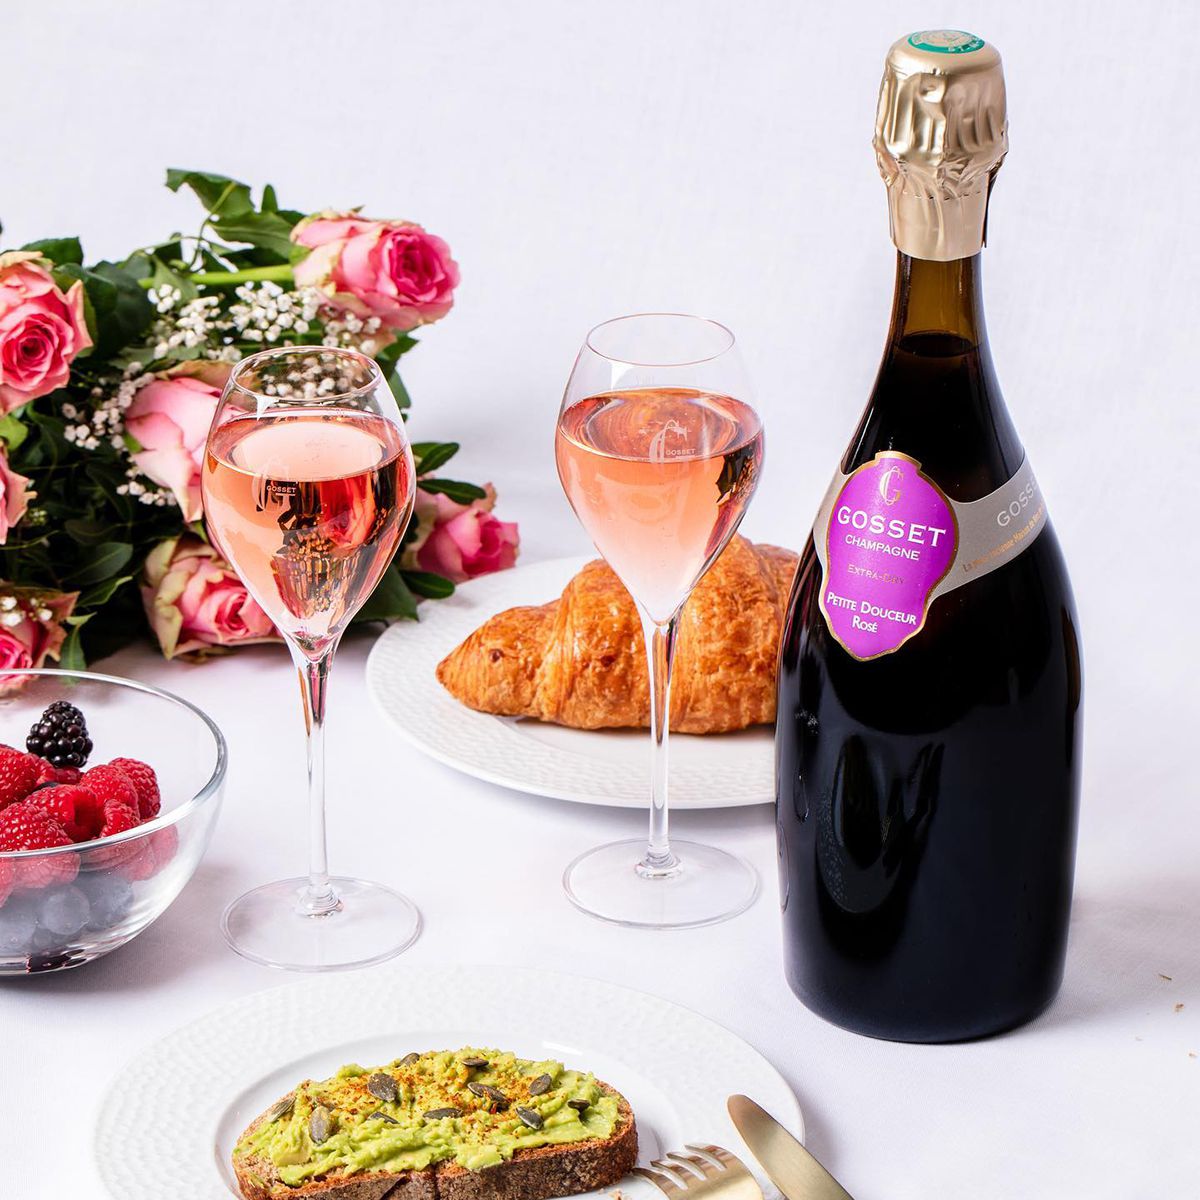 Celebrate Valentine's Day with Gosset Petite Douceur Rosé,